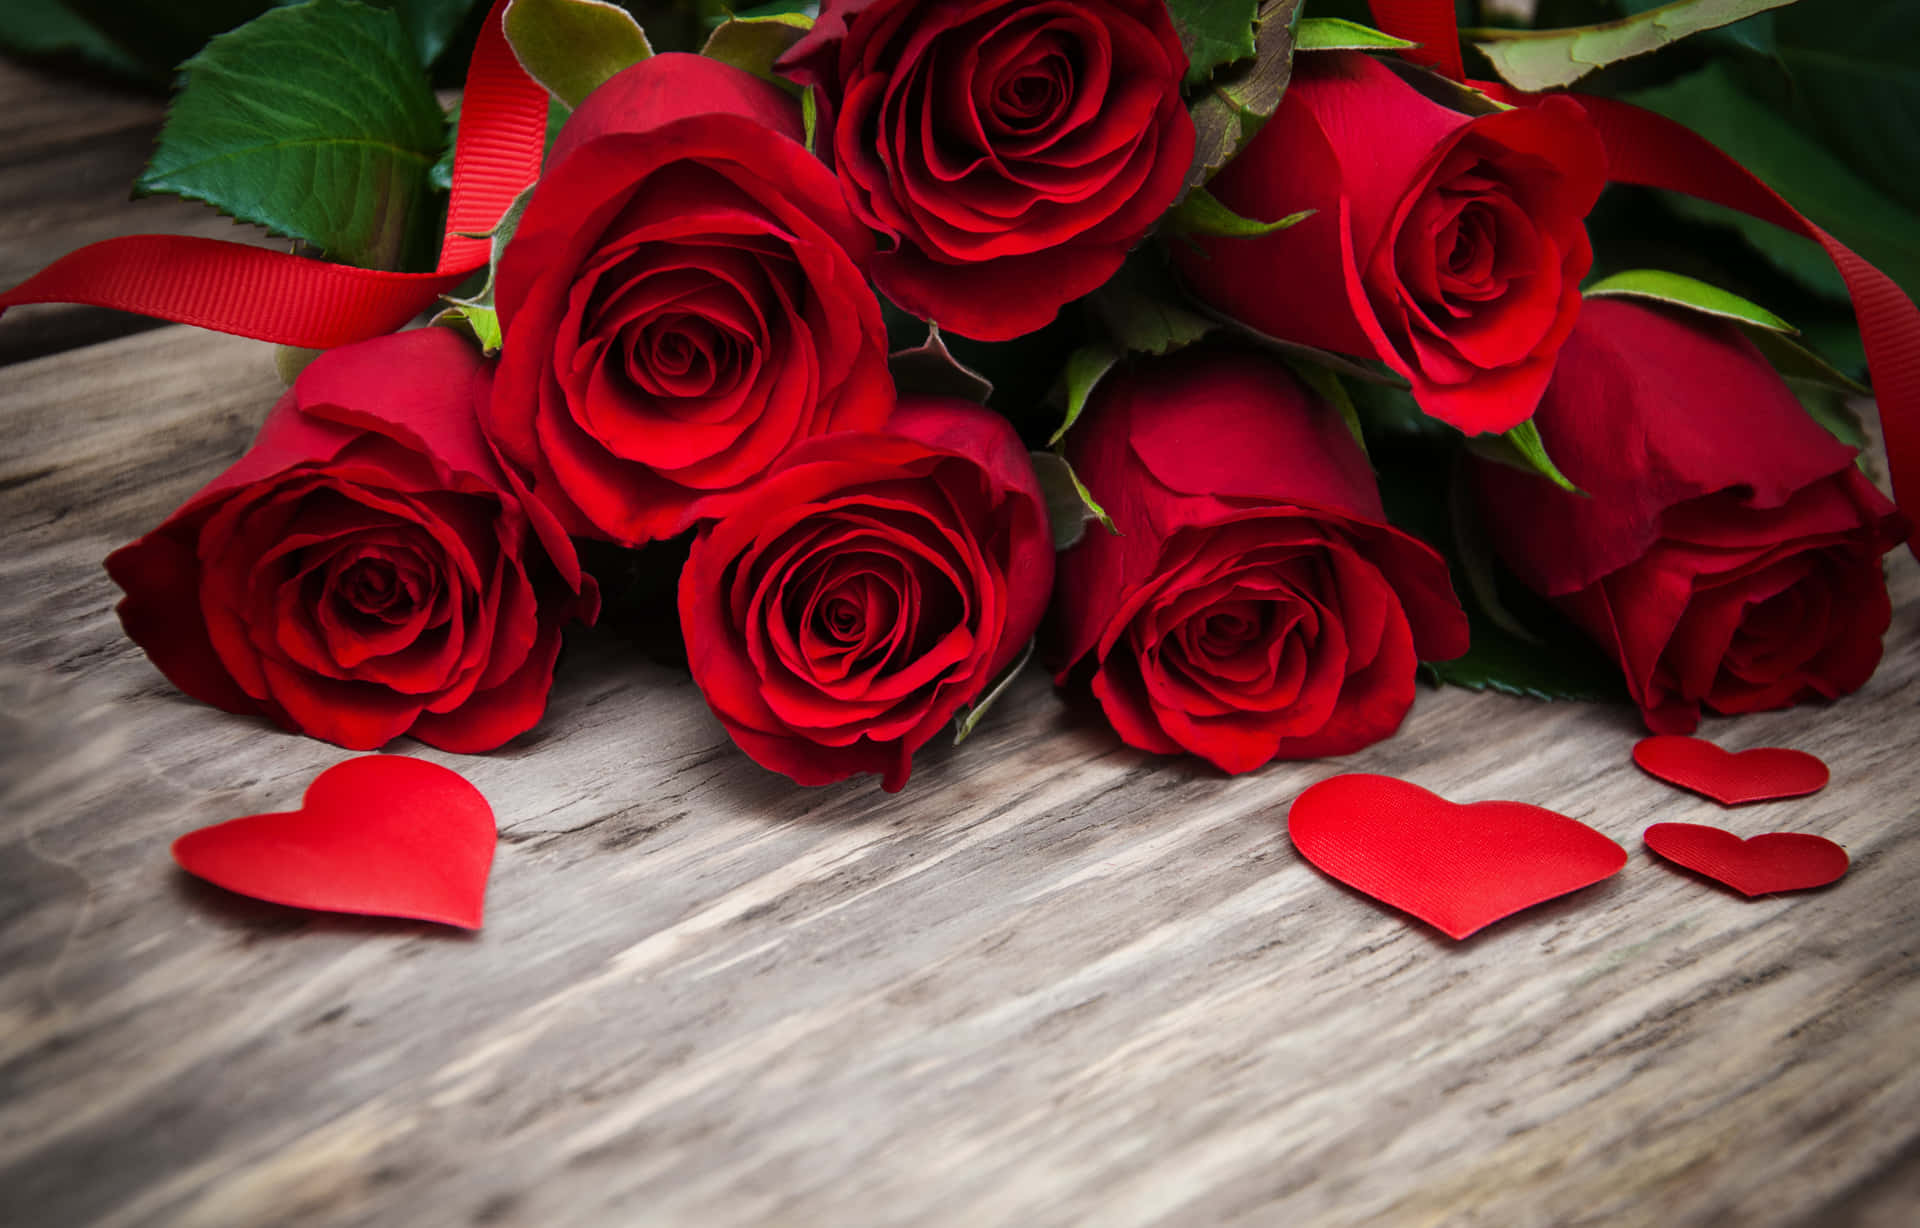 Couple Heart Rose Bouquet Pictures